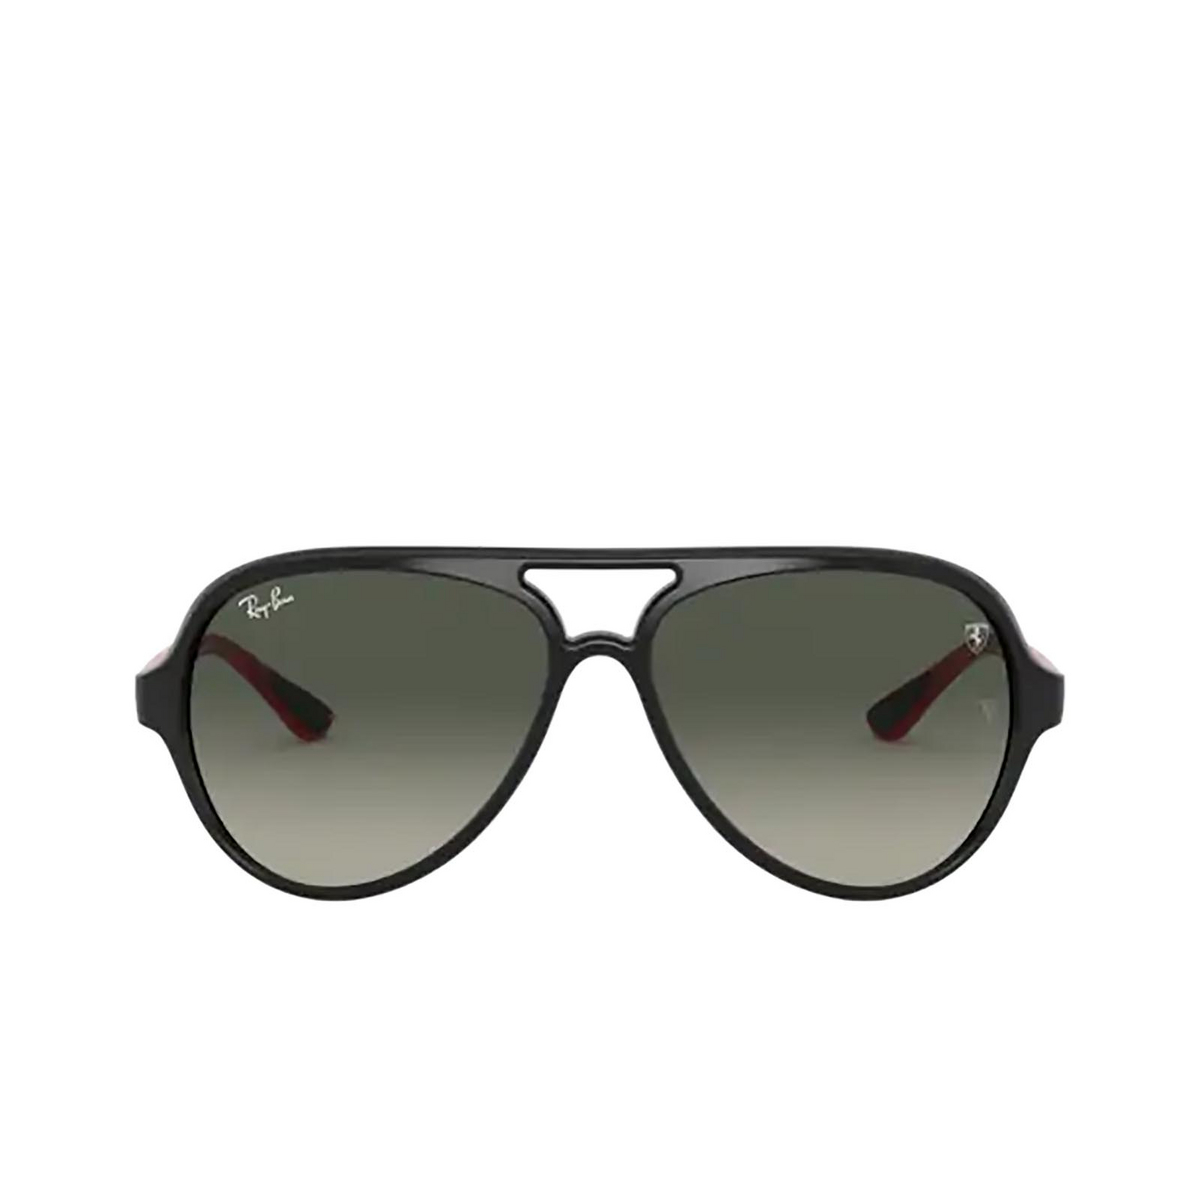 Ray-Ban® Aviator Sunglasses: RB4125M color Black F64471 - 1/3.